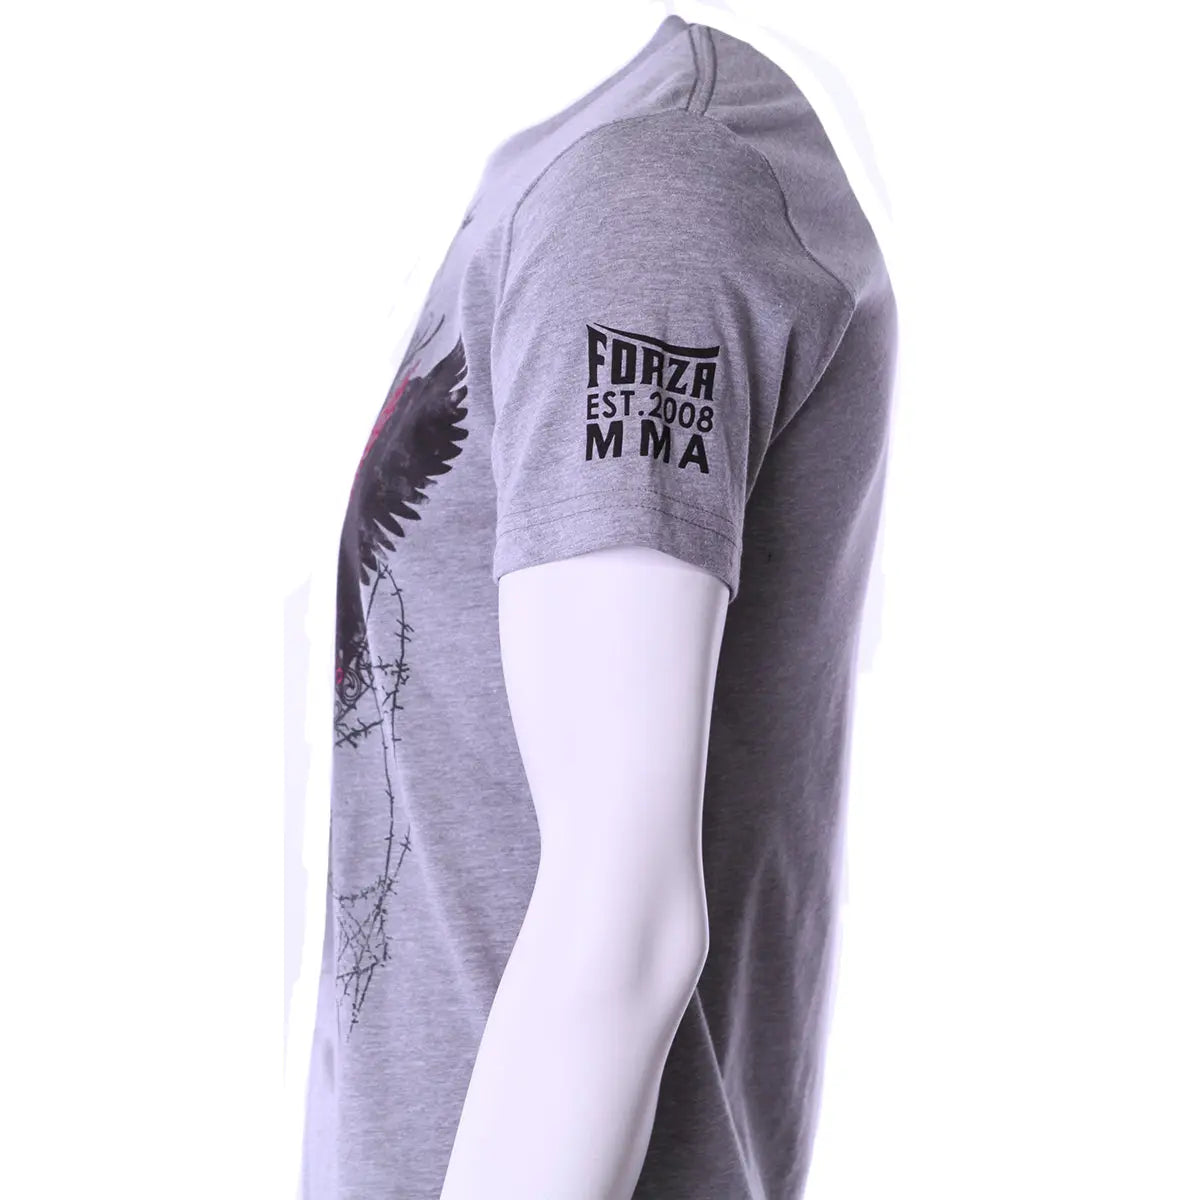 Forza Sports "Soar" MMA T-Shirt - Dark Heather Gray Forza Sports